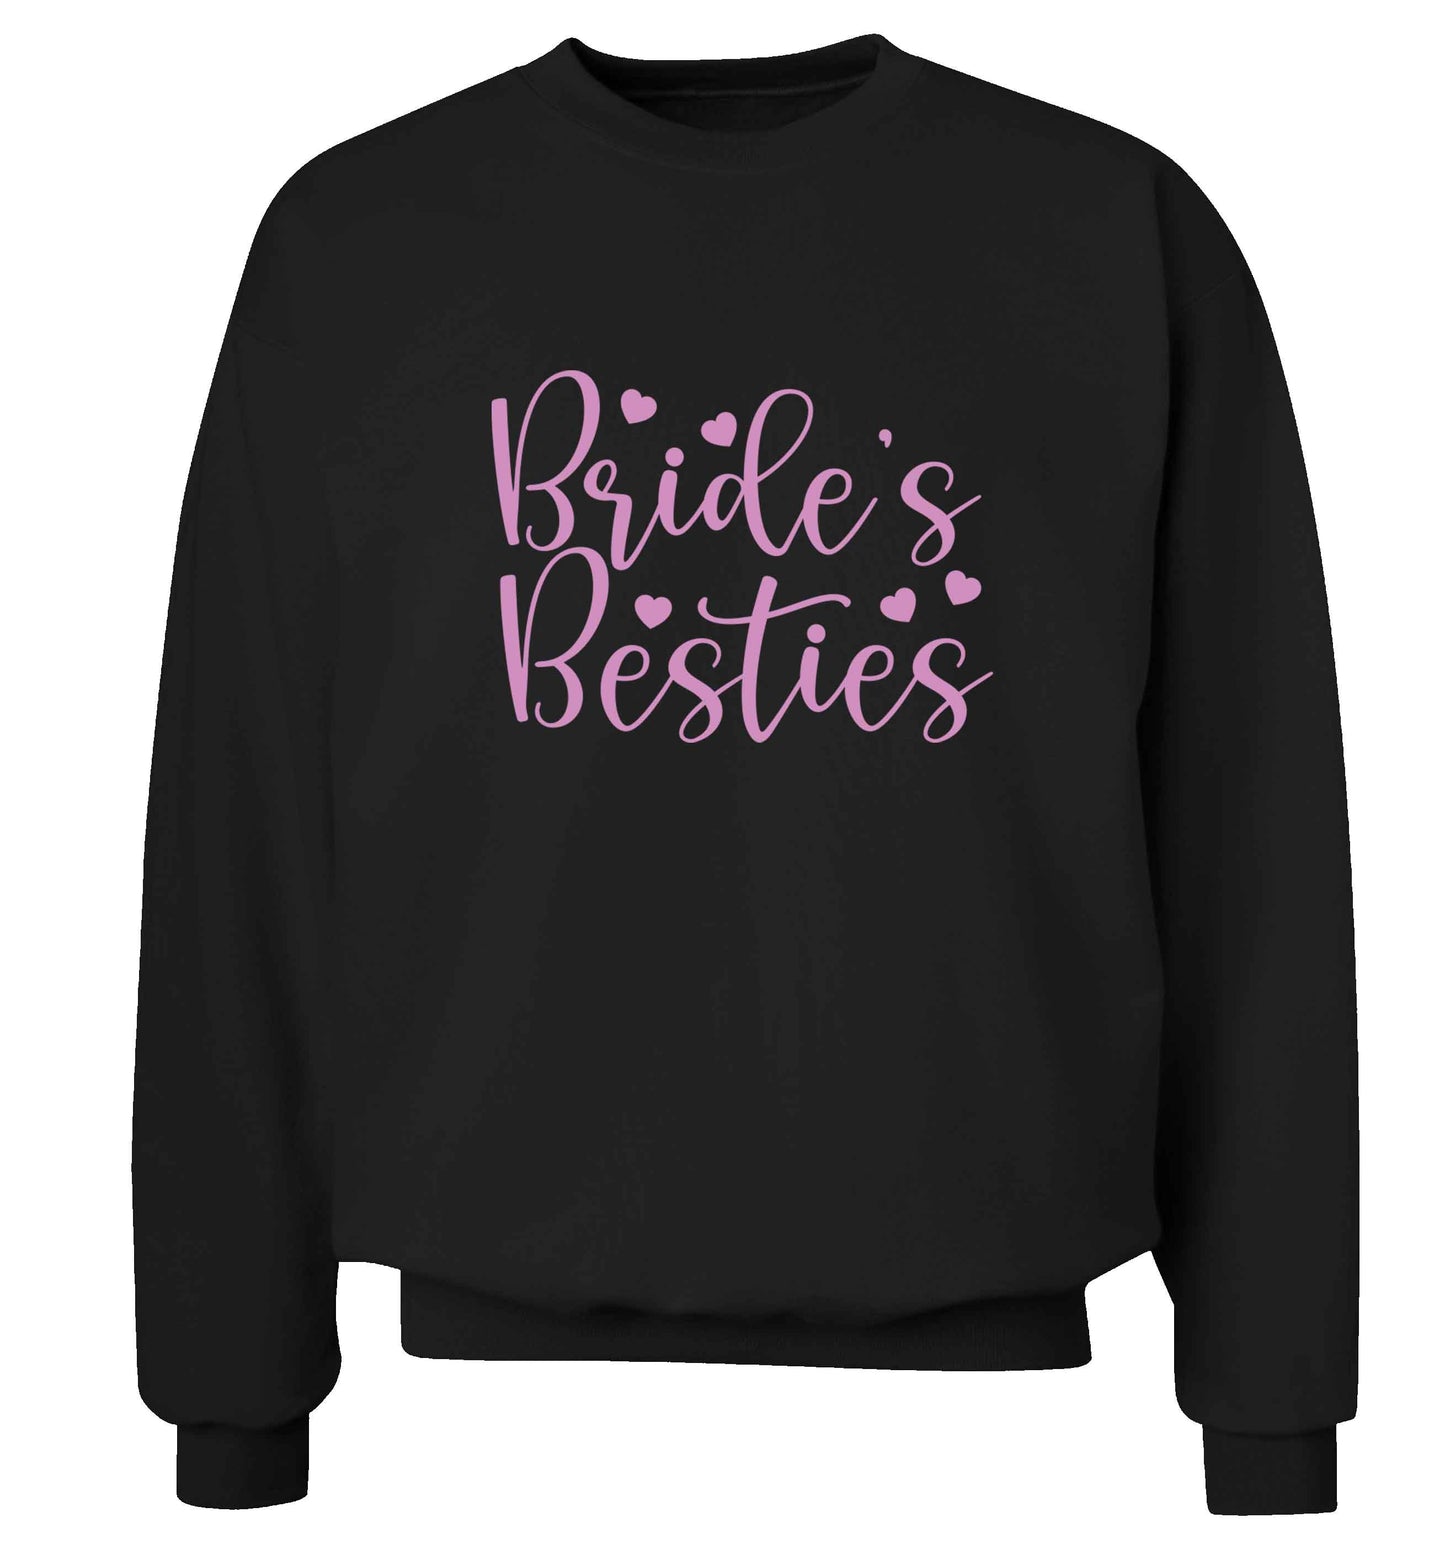 Brides besties adult's unisex black sweater 2XL